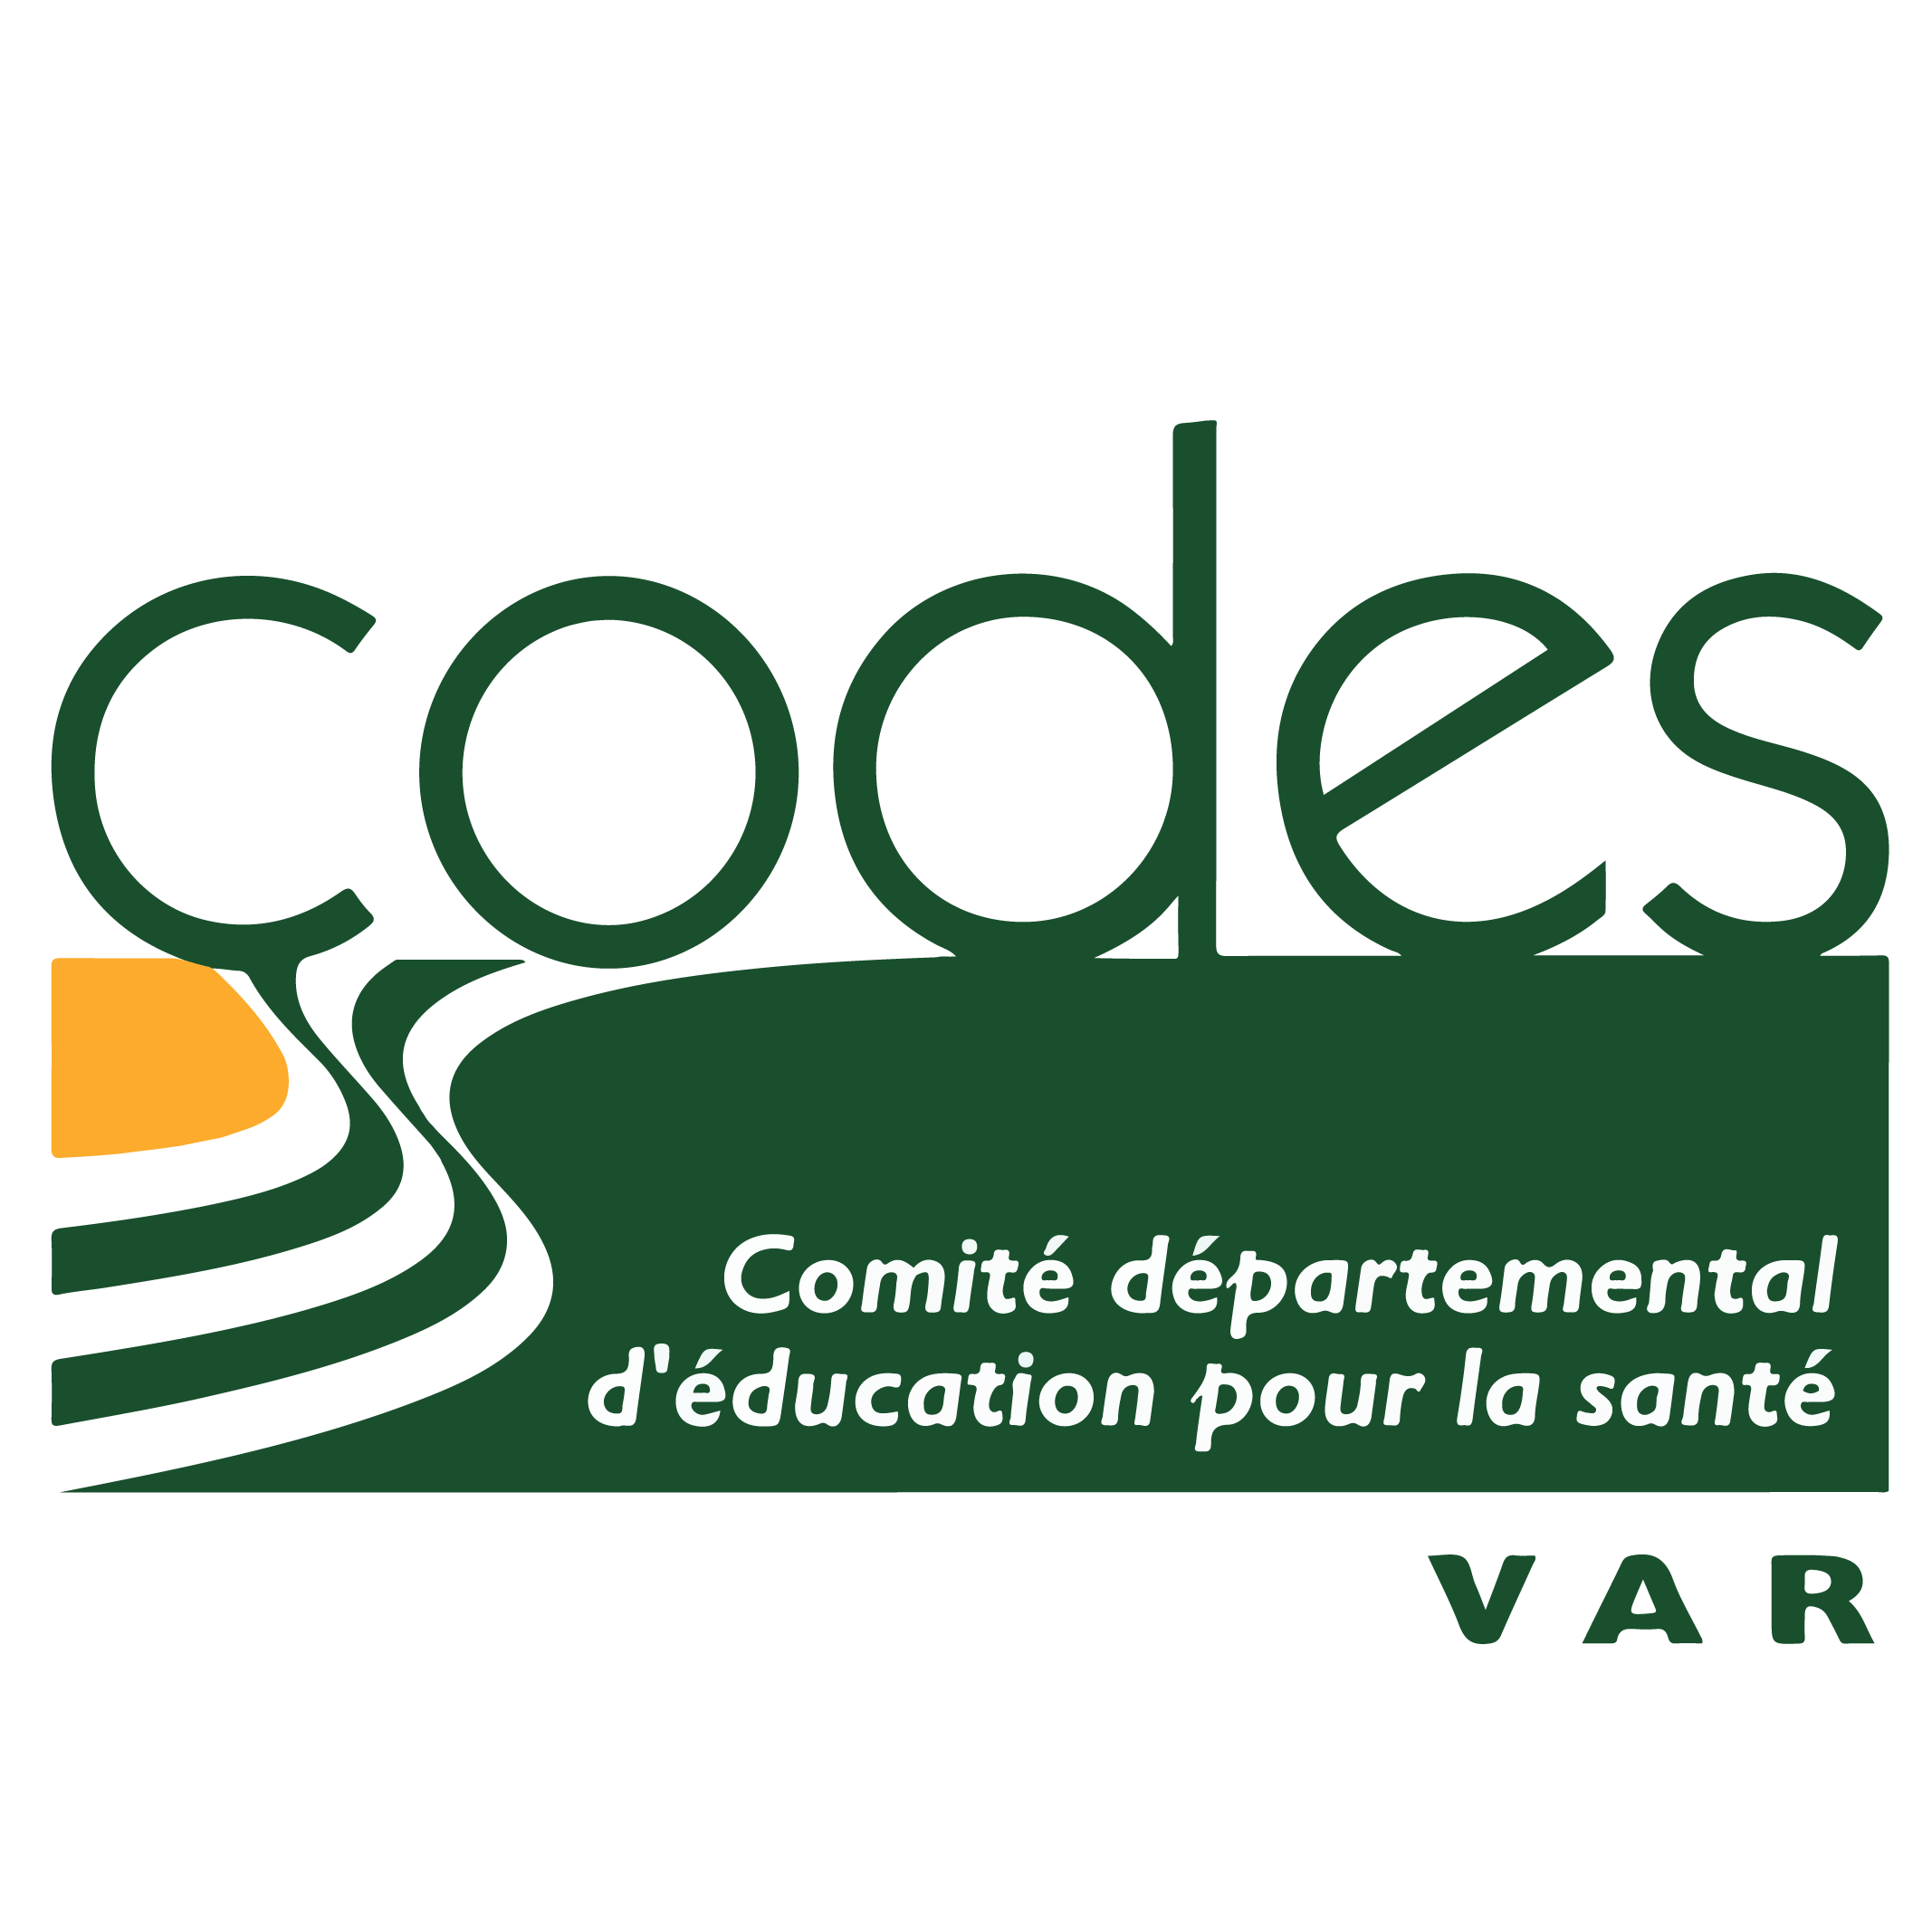 codes logo